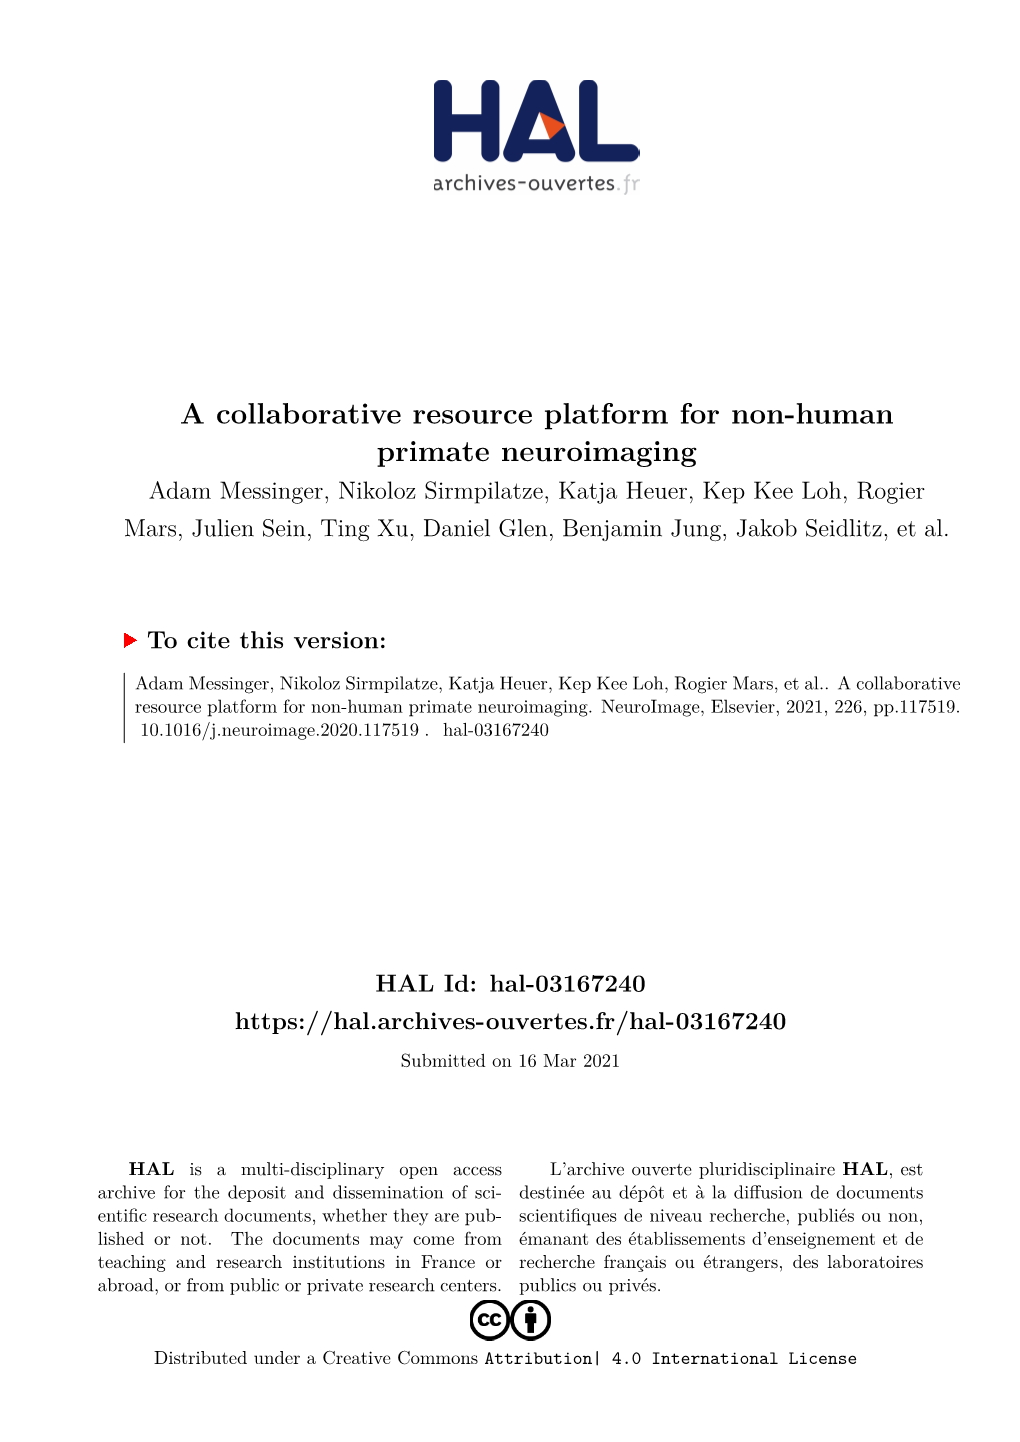 A Collaborative Resource Platform for Non-Human